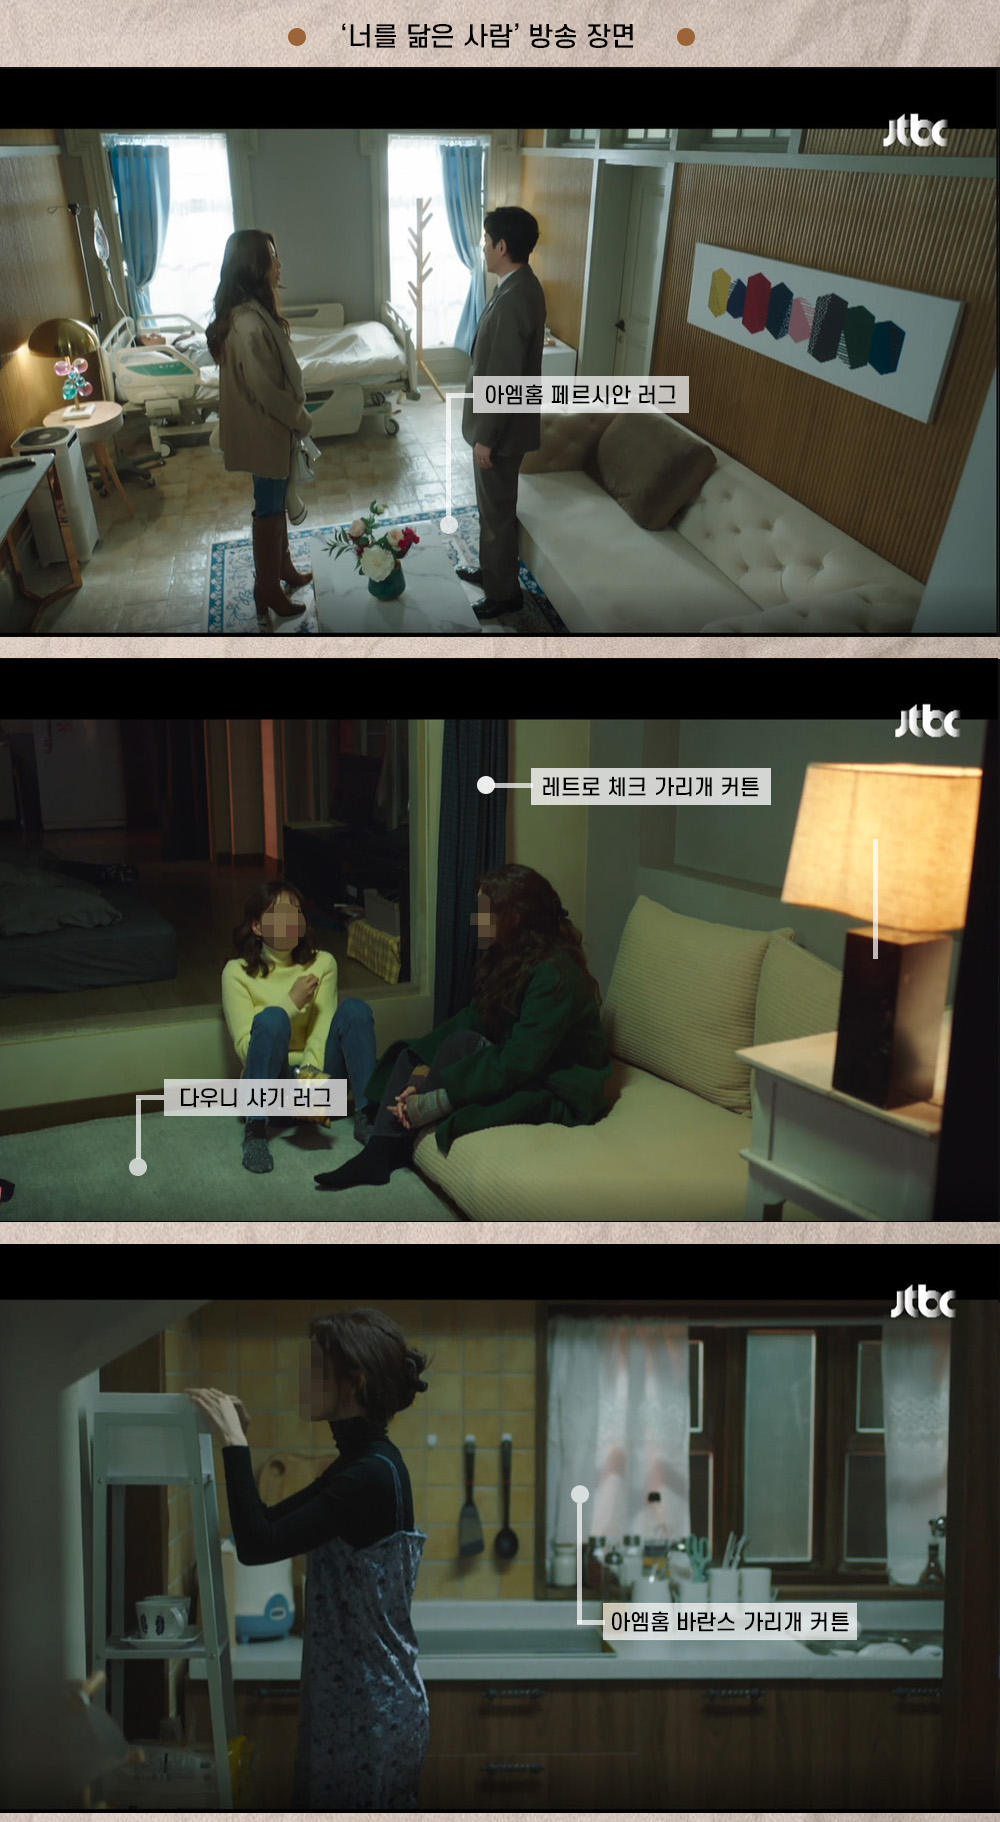 tvN 수목드라마 '너를 닮은 사람' 아엠홈 협찬 상품